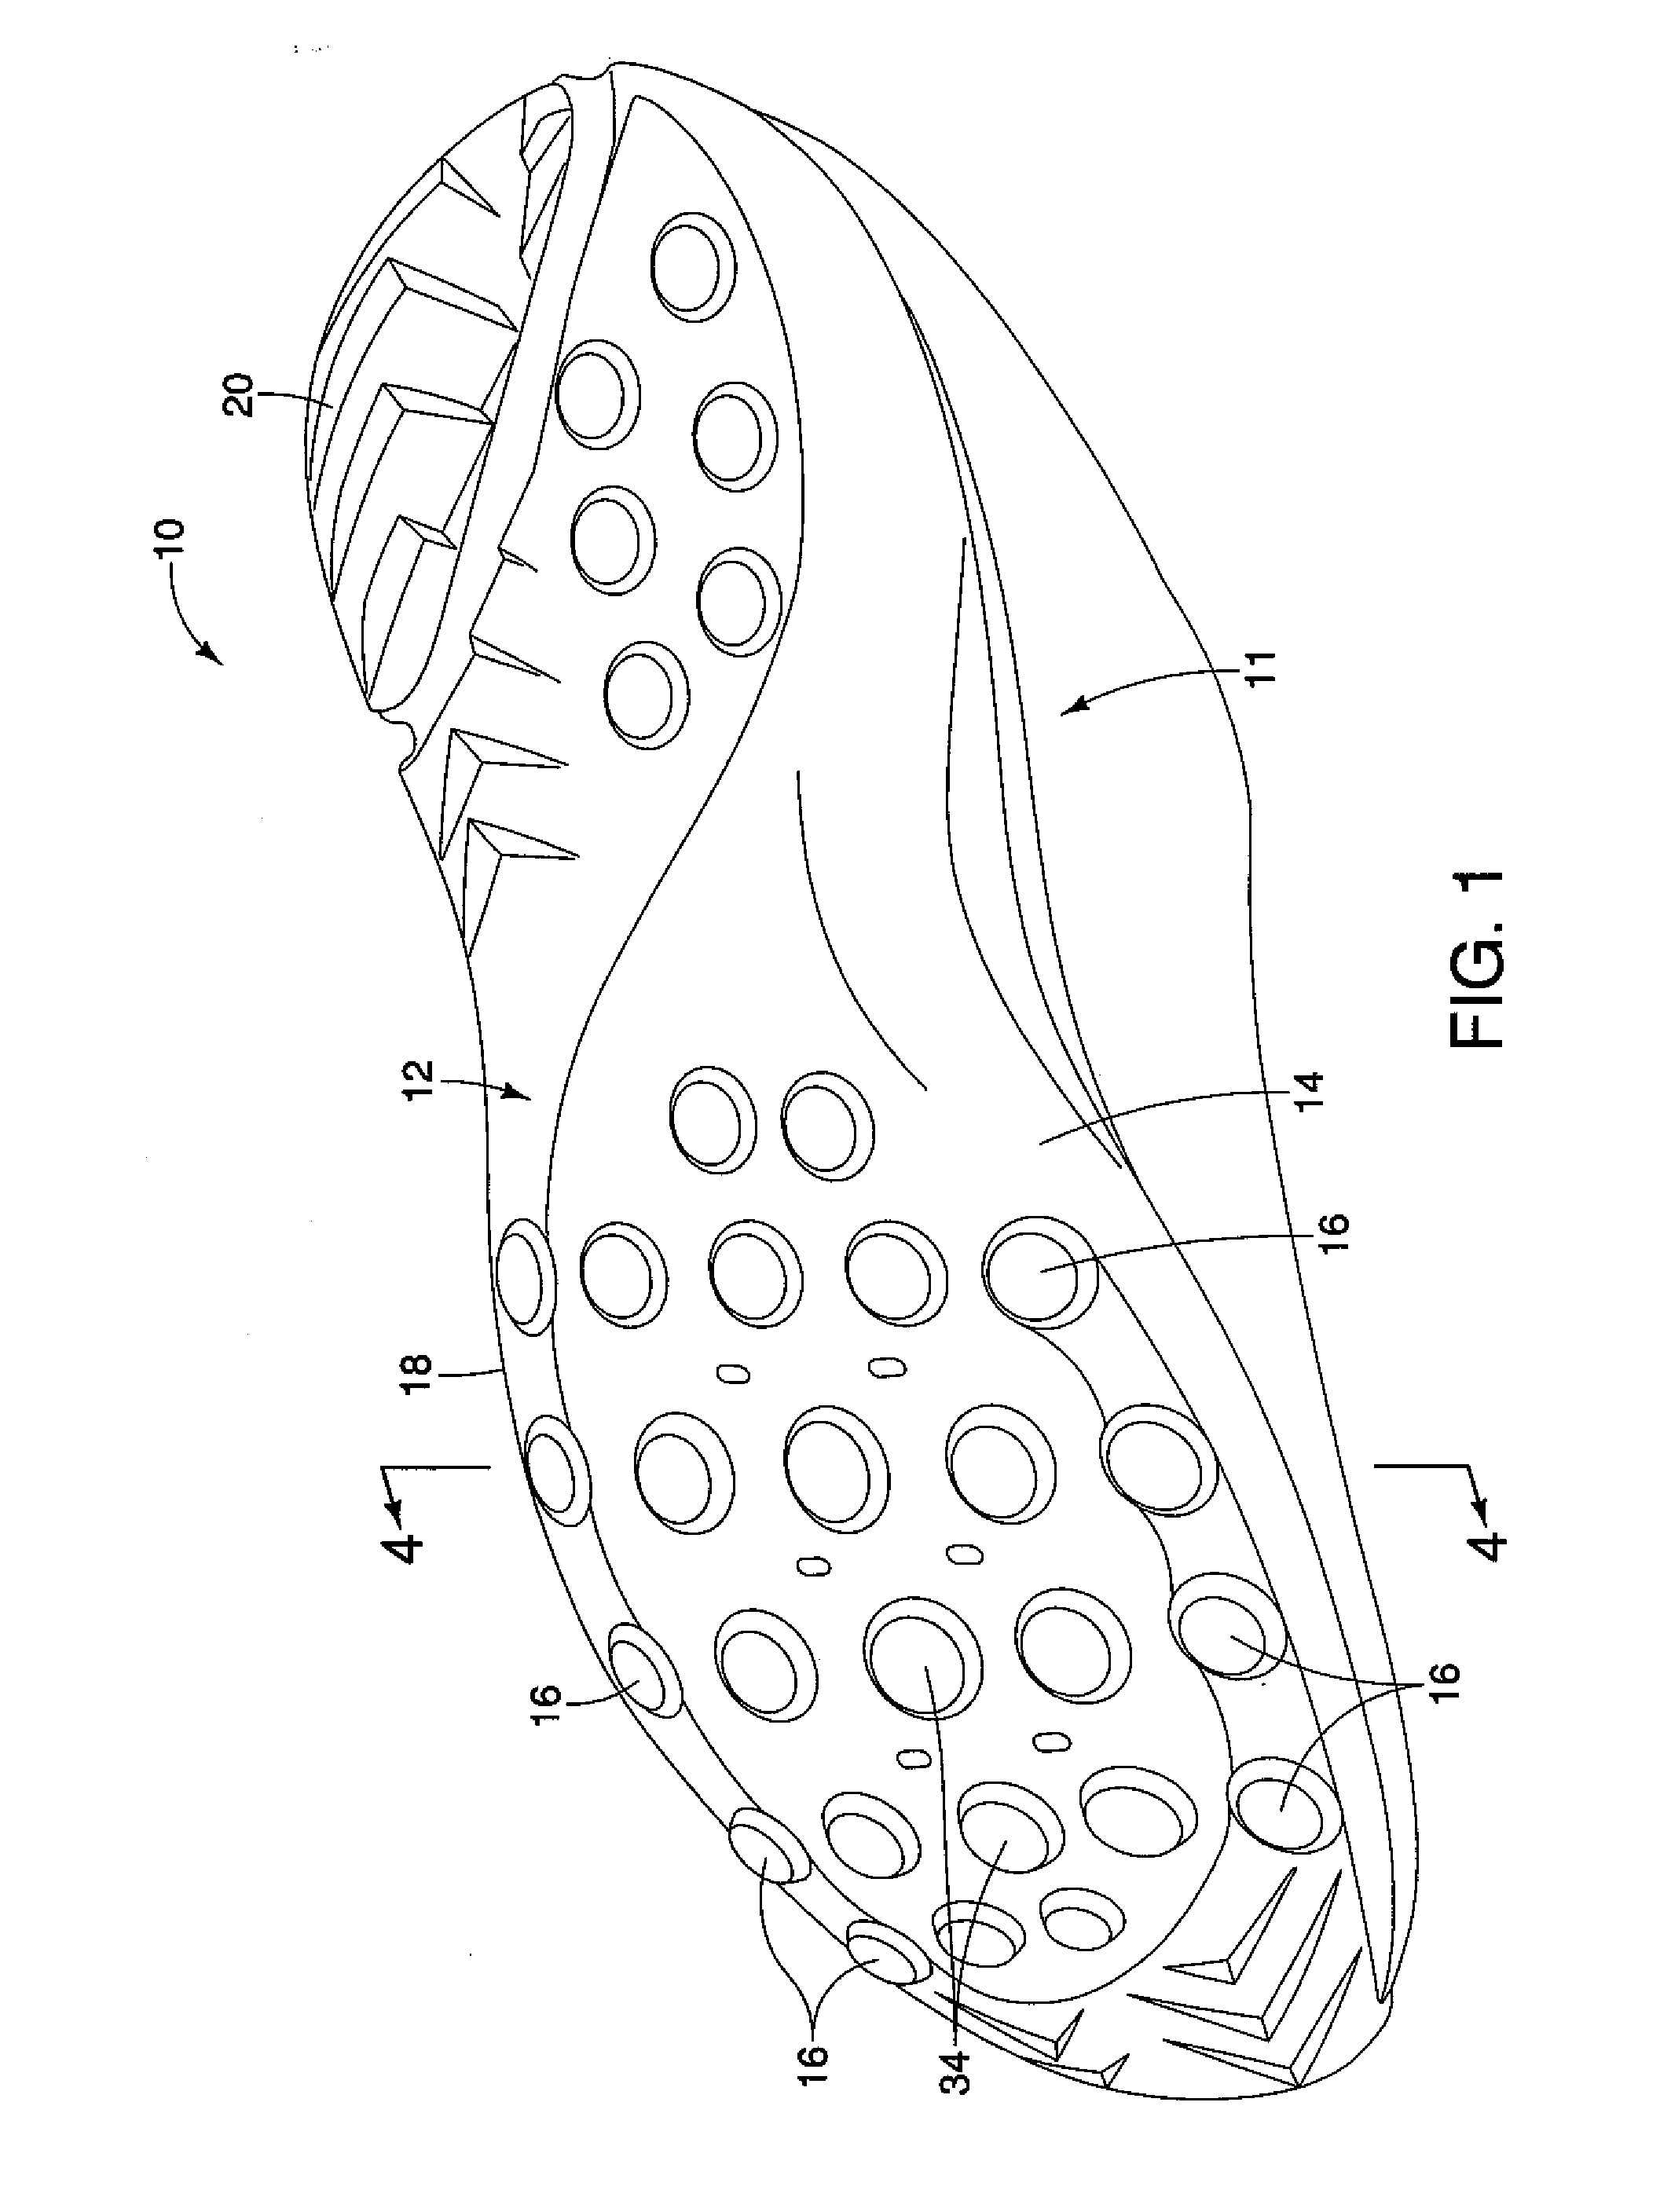 Footwear including a self-adjusting midsole